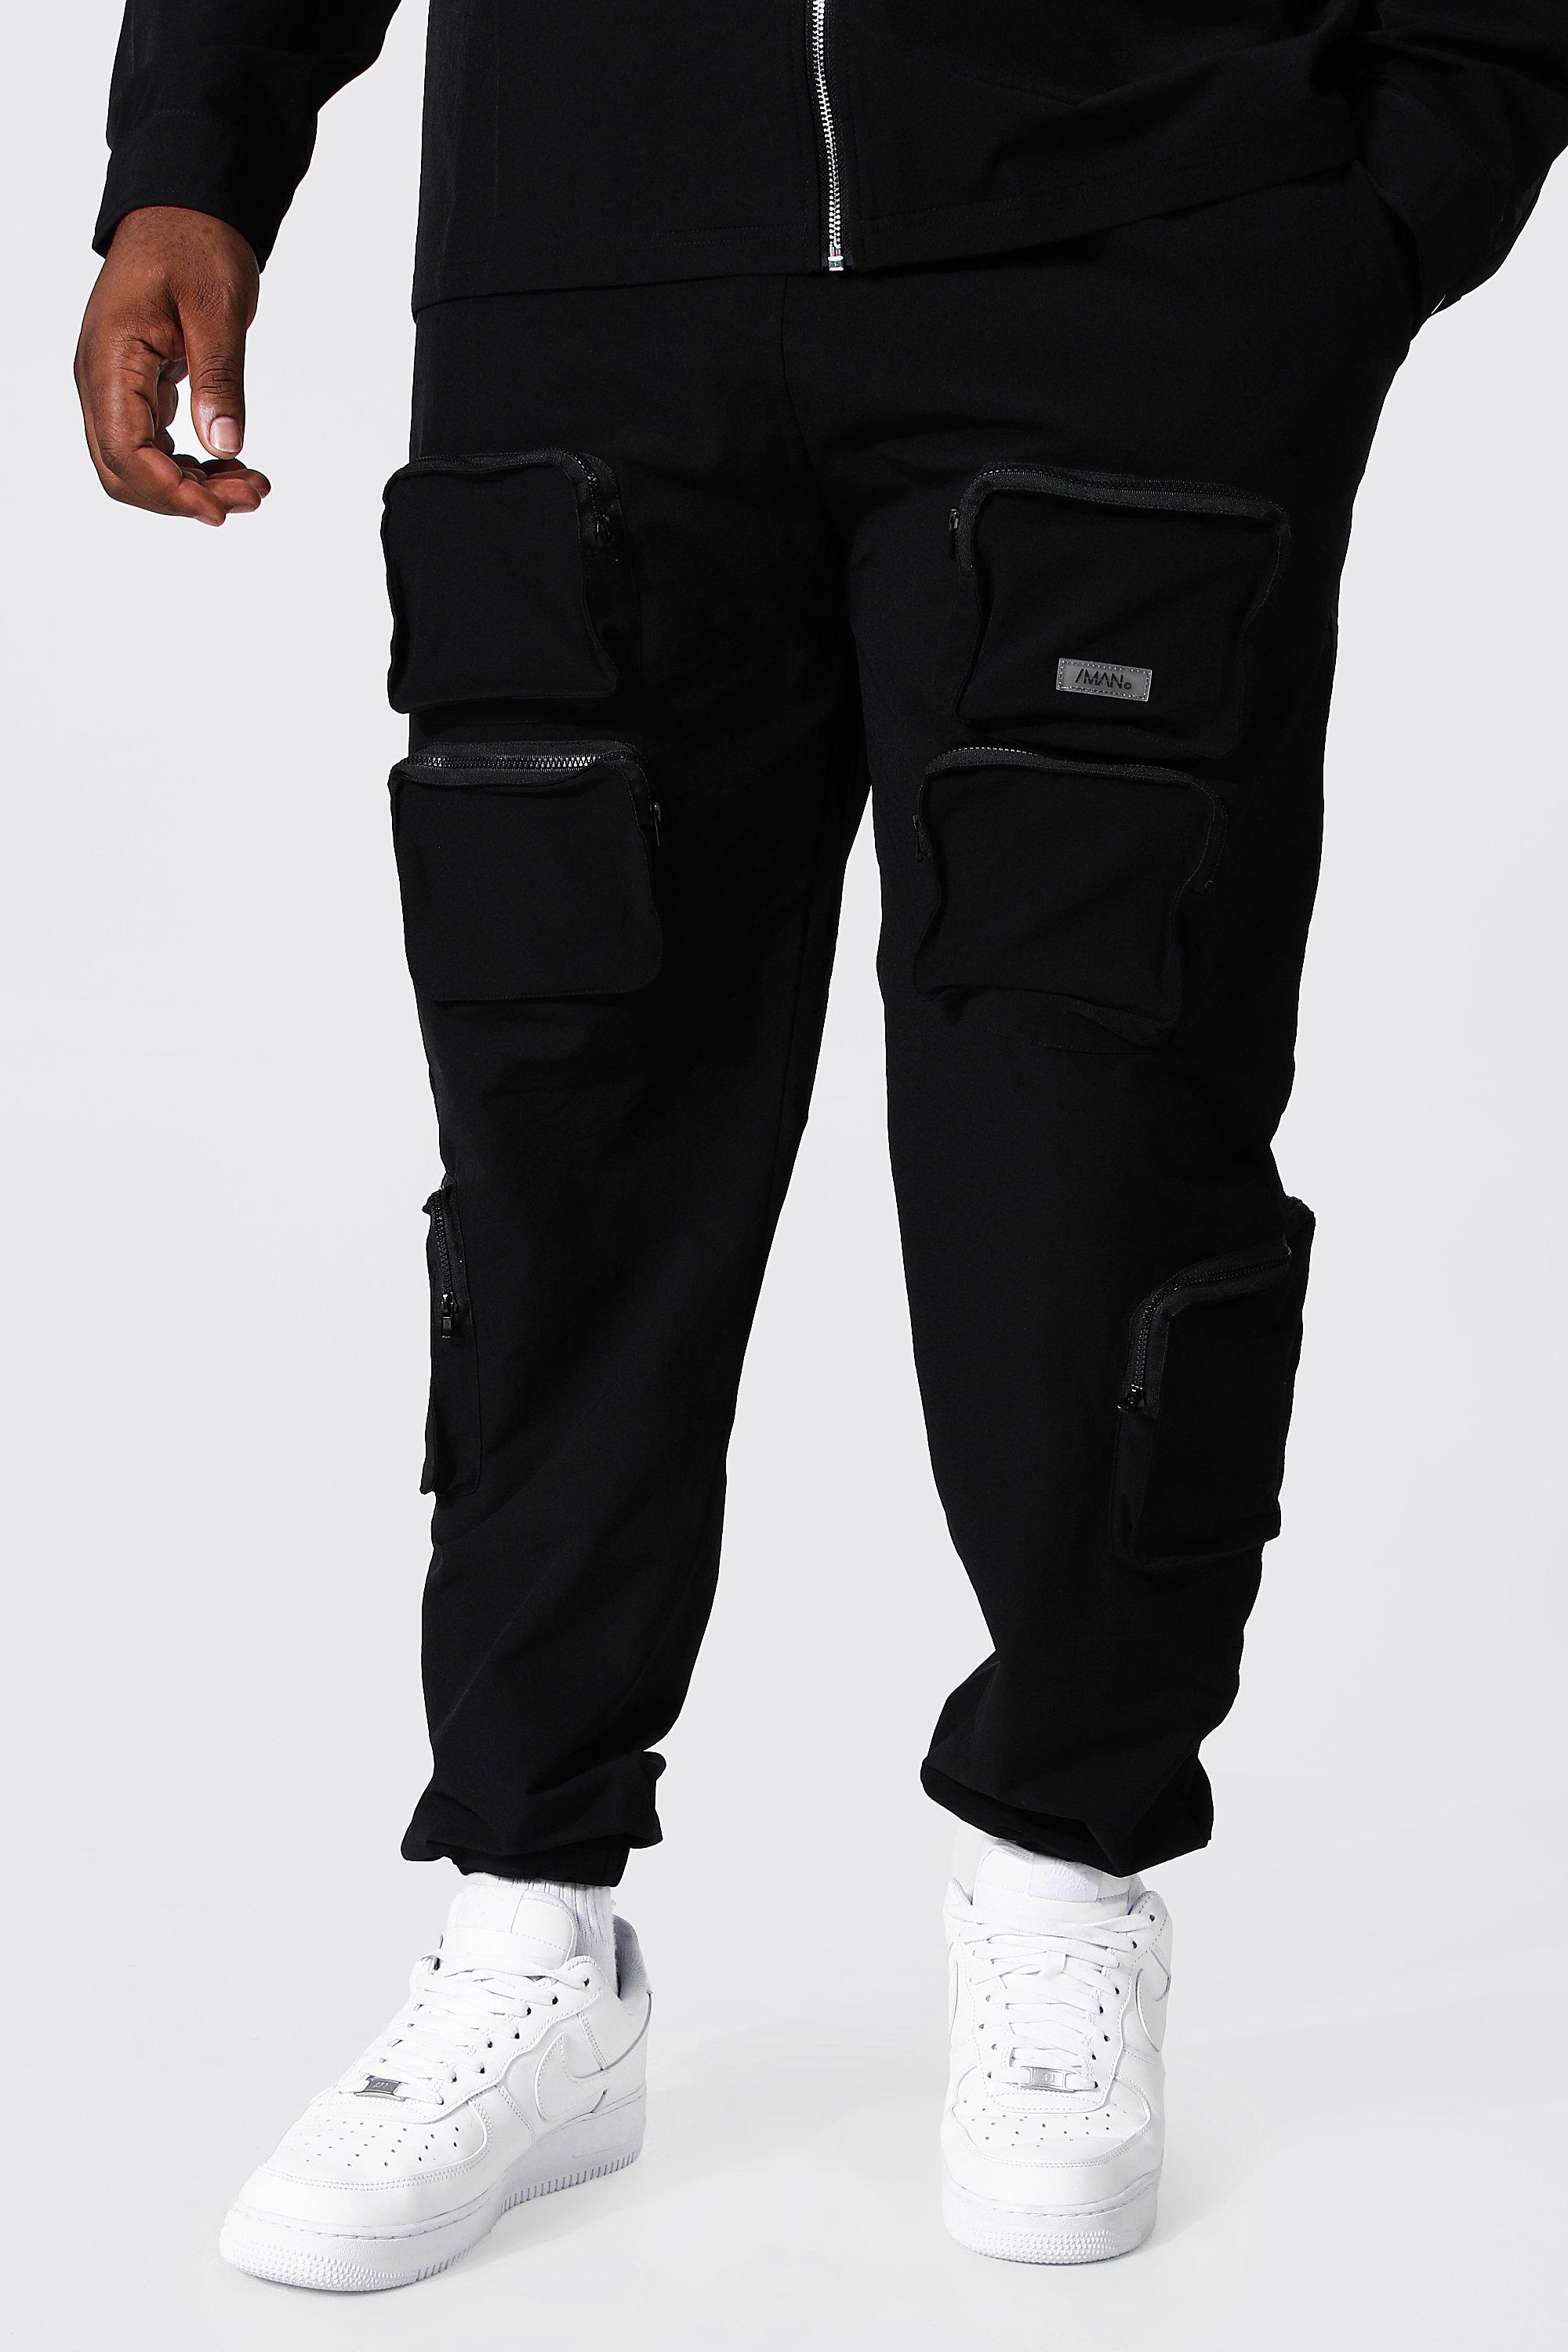 3D Pockets Cargo Pants